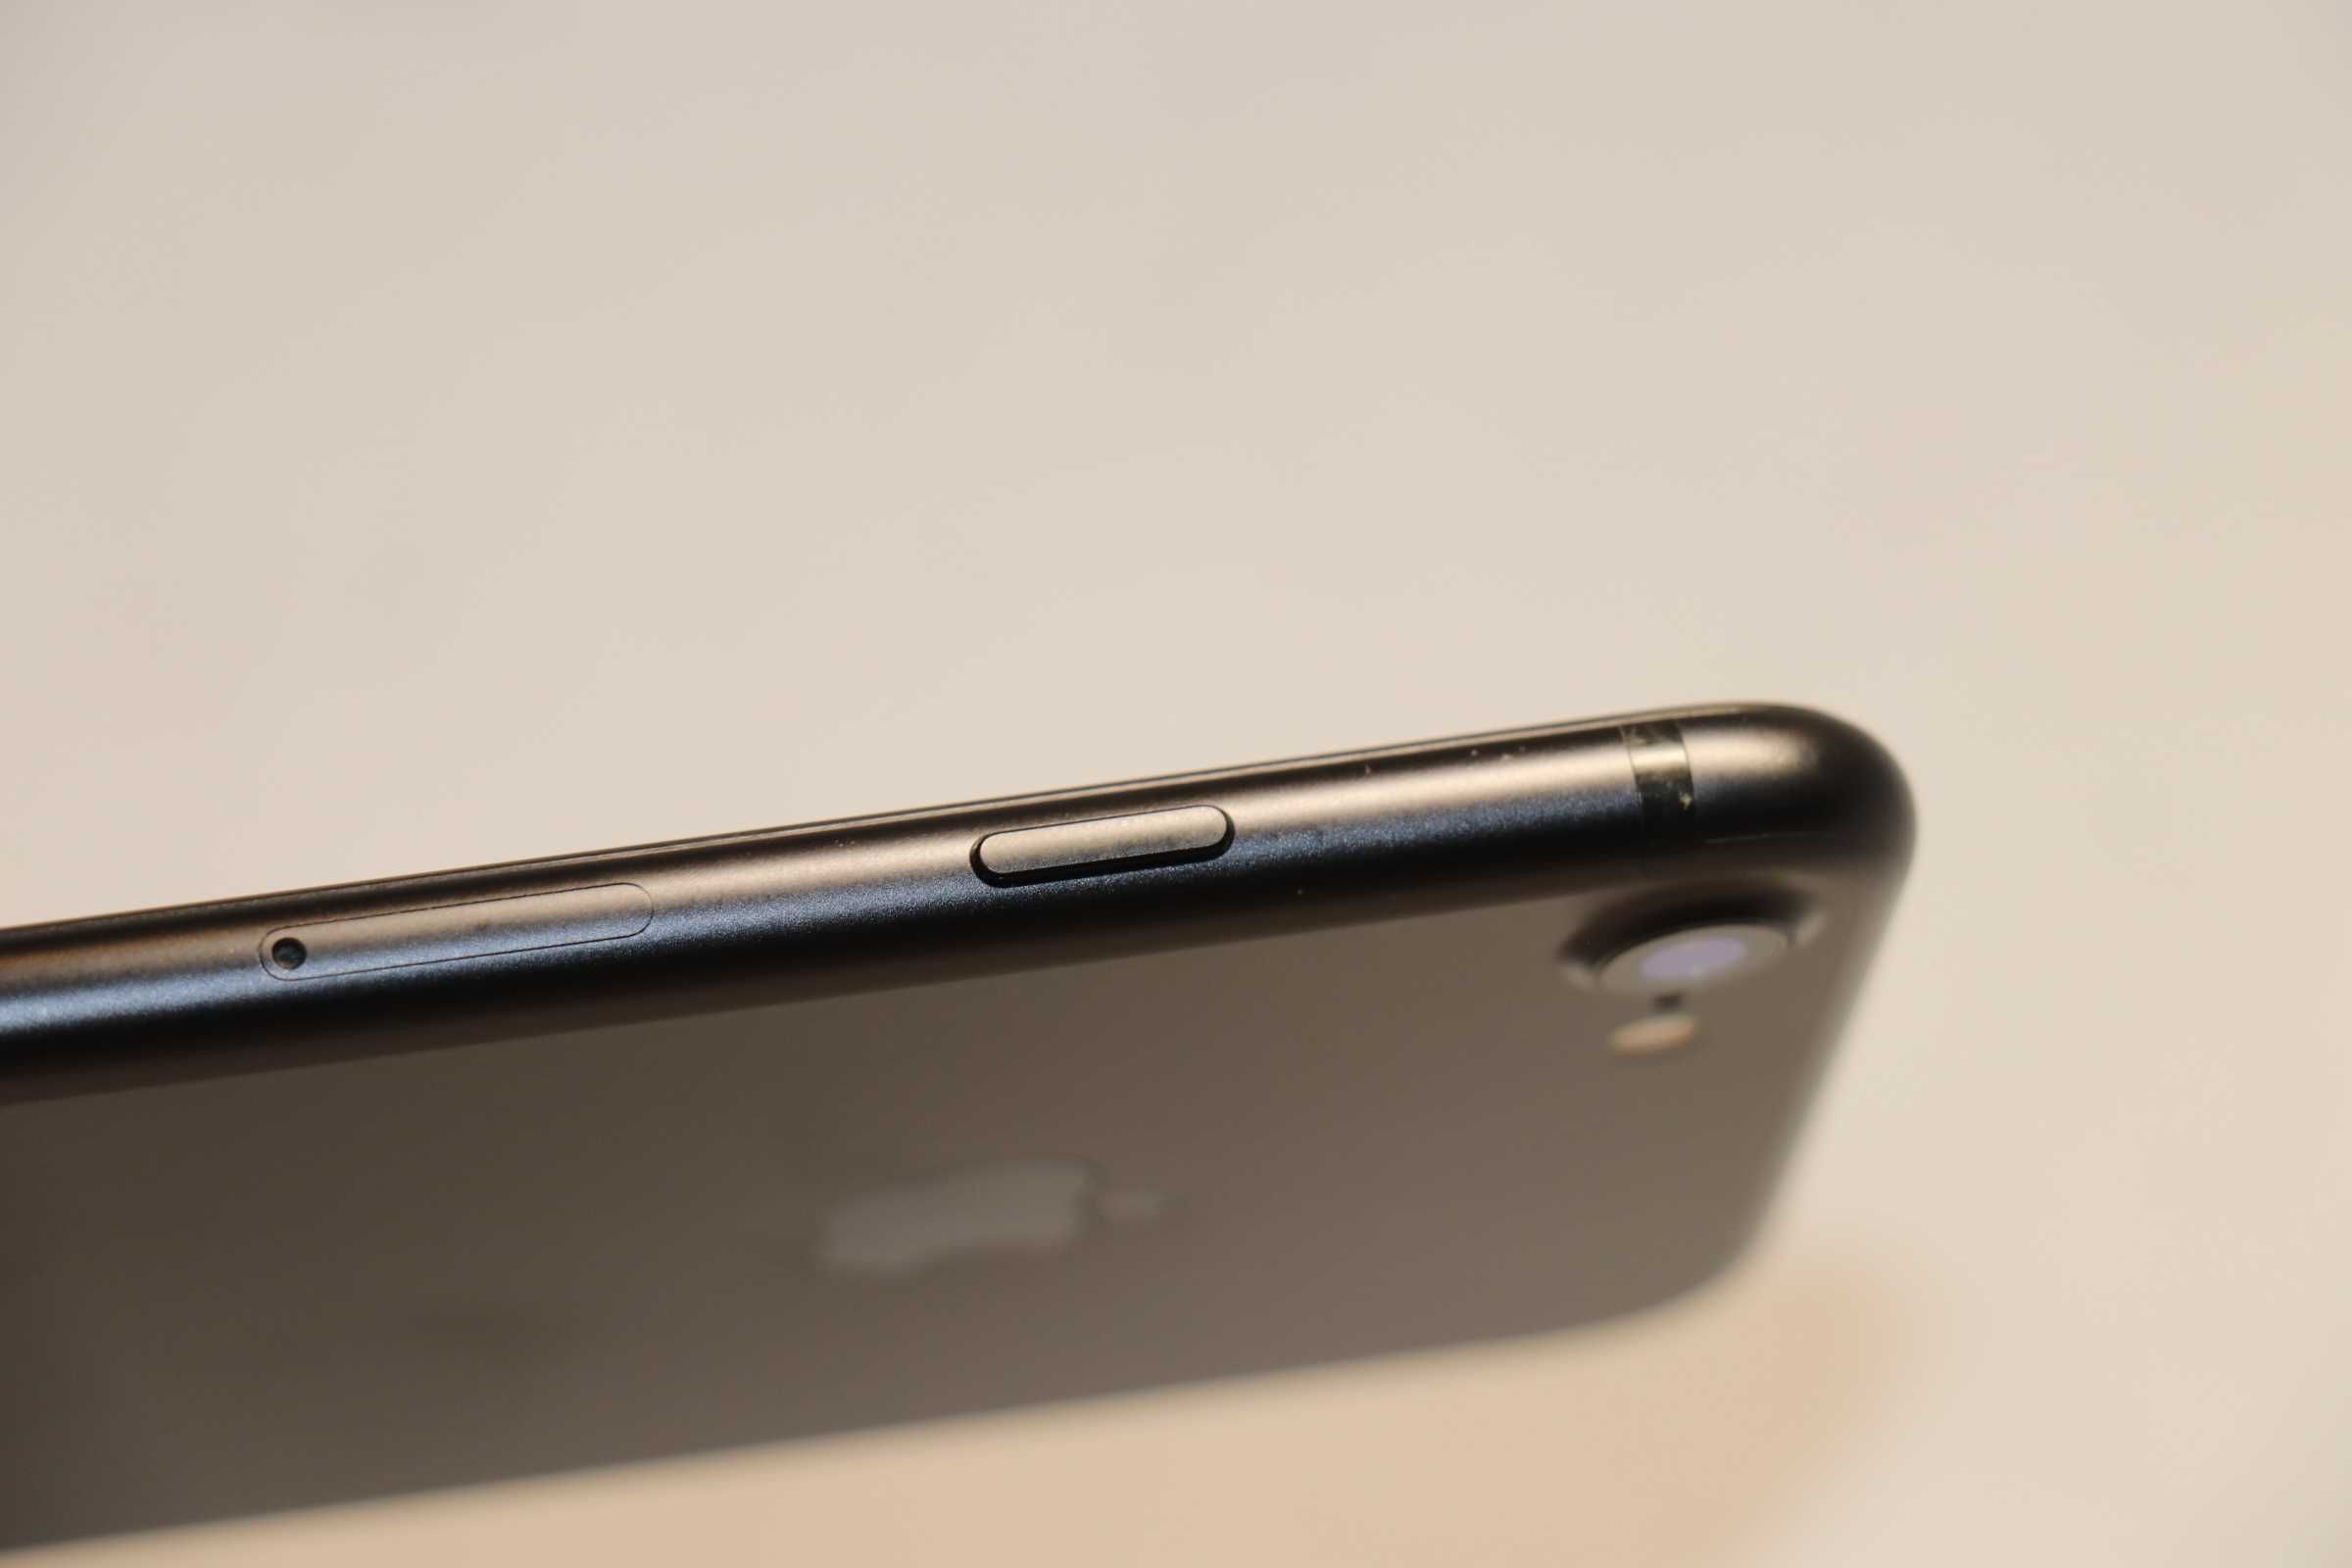 Apple iPhone 7 32GB Black, идеальное состояние! Наложка